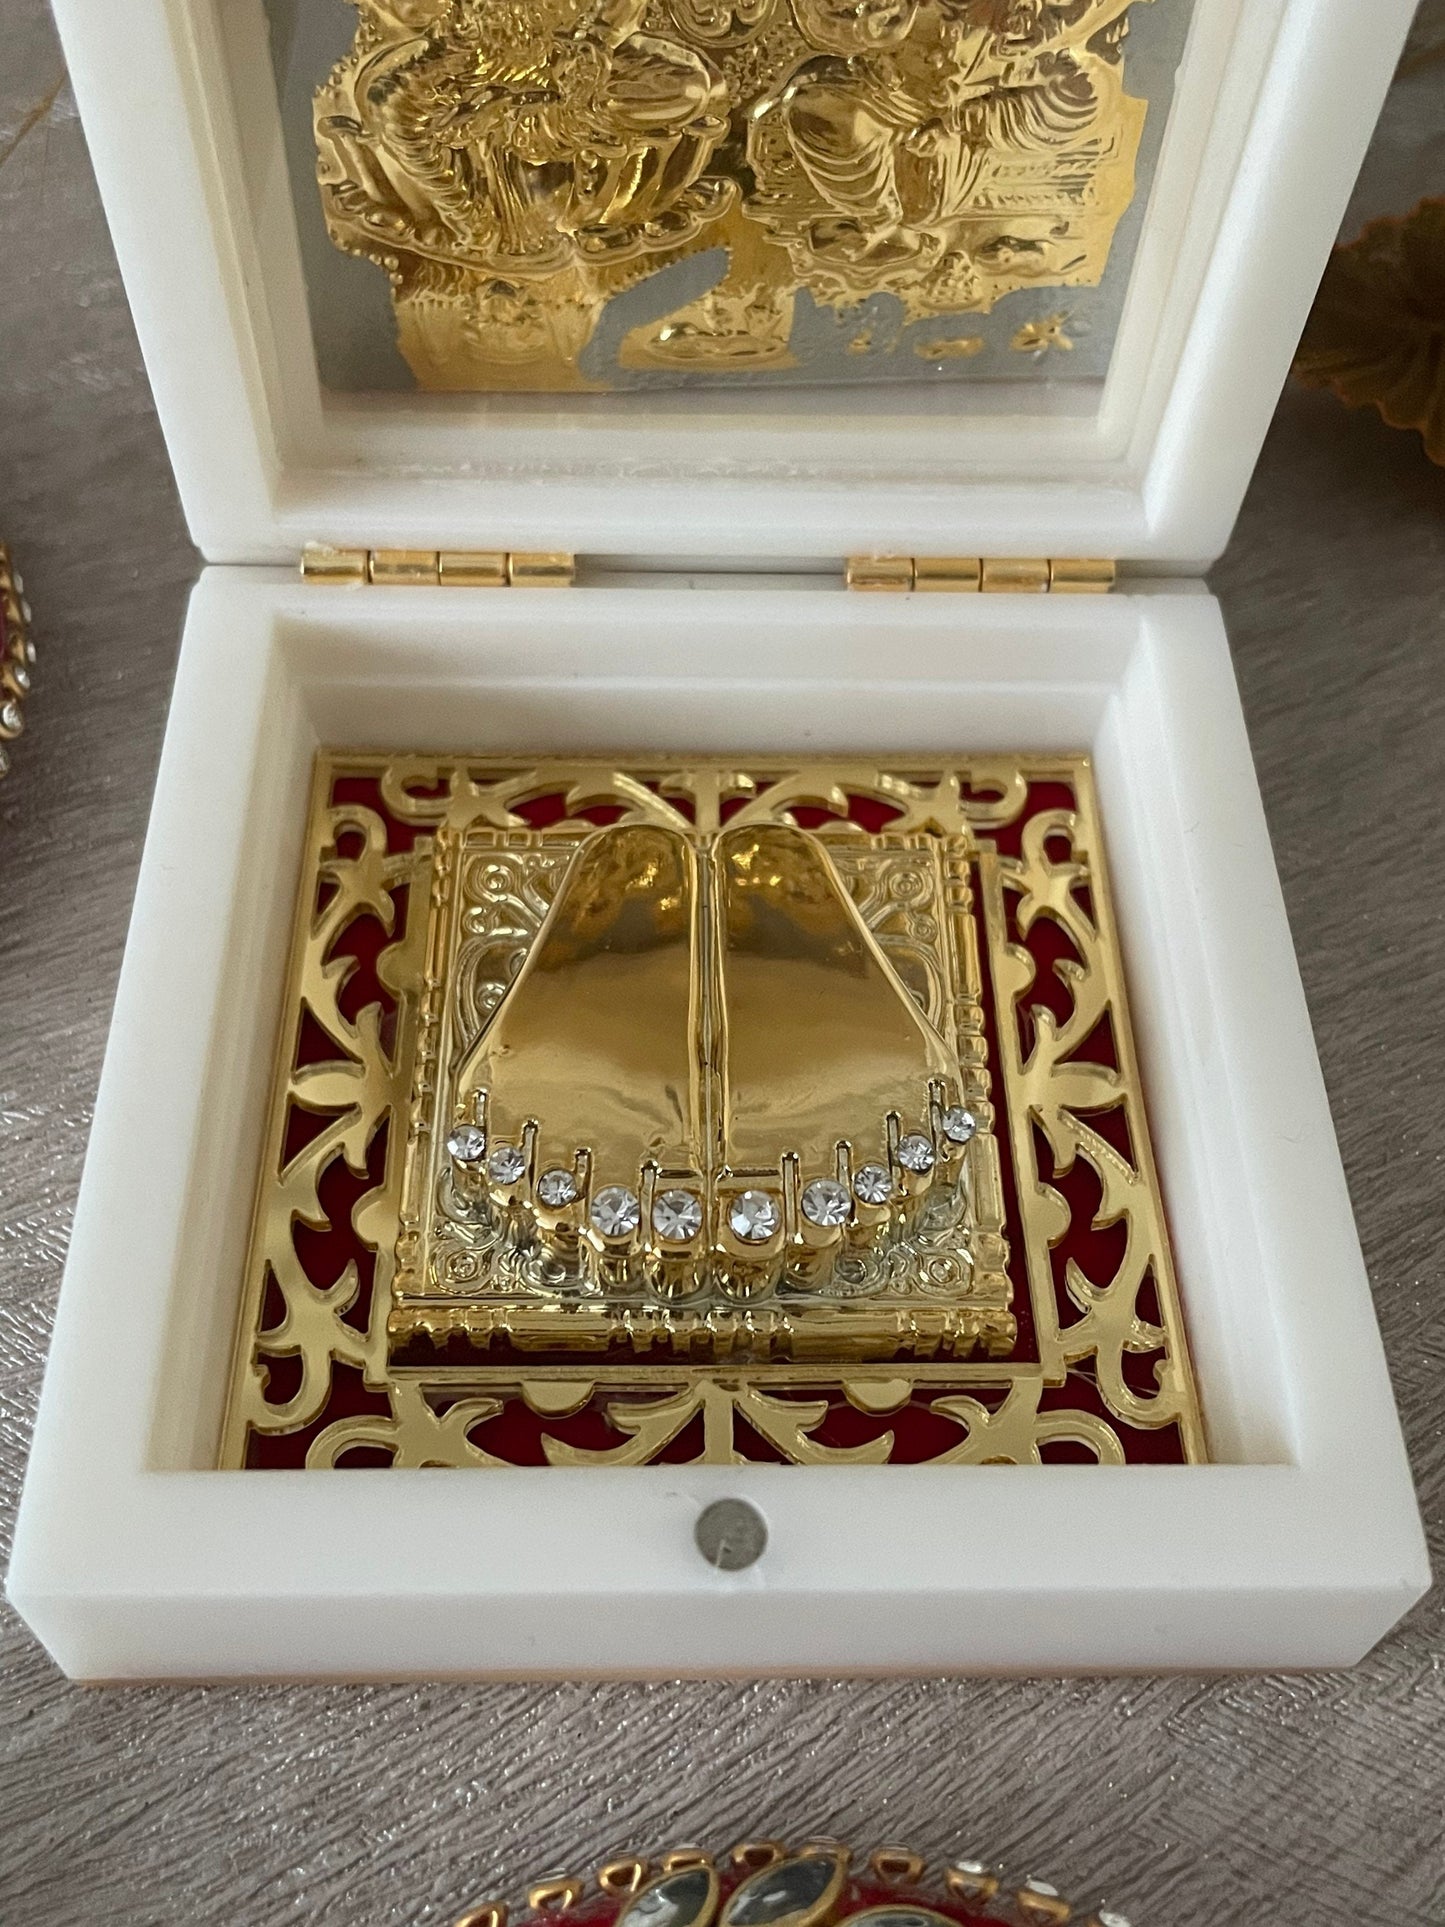 Diwali Gifts| Lakshmi Ganesh Saraswati Gift Boxes| folding temple| Charan Paduka|Shree Yantra